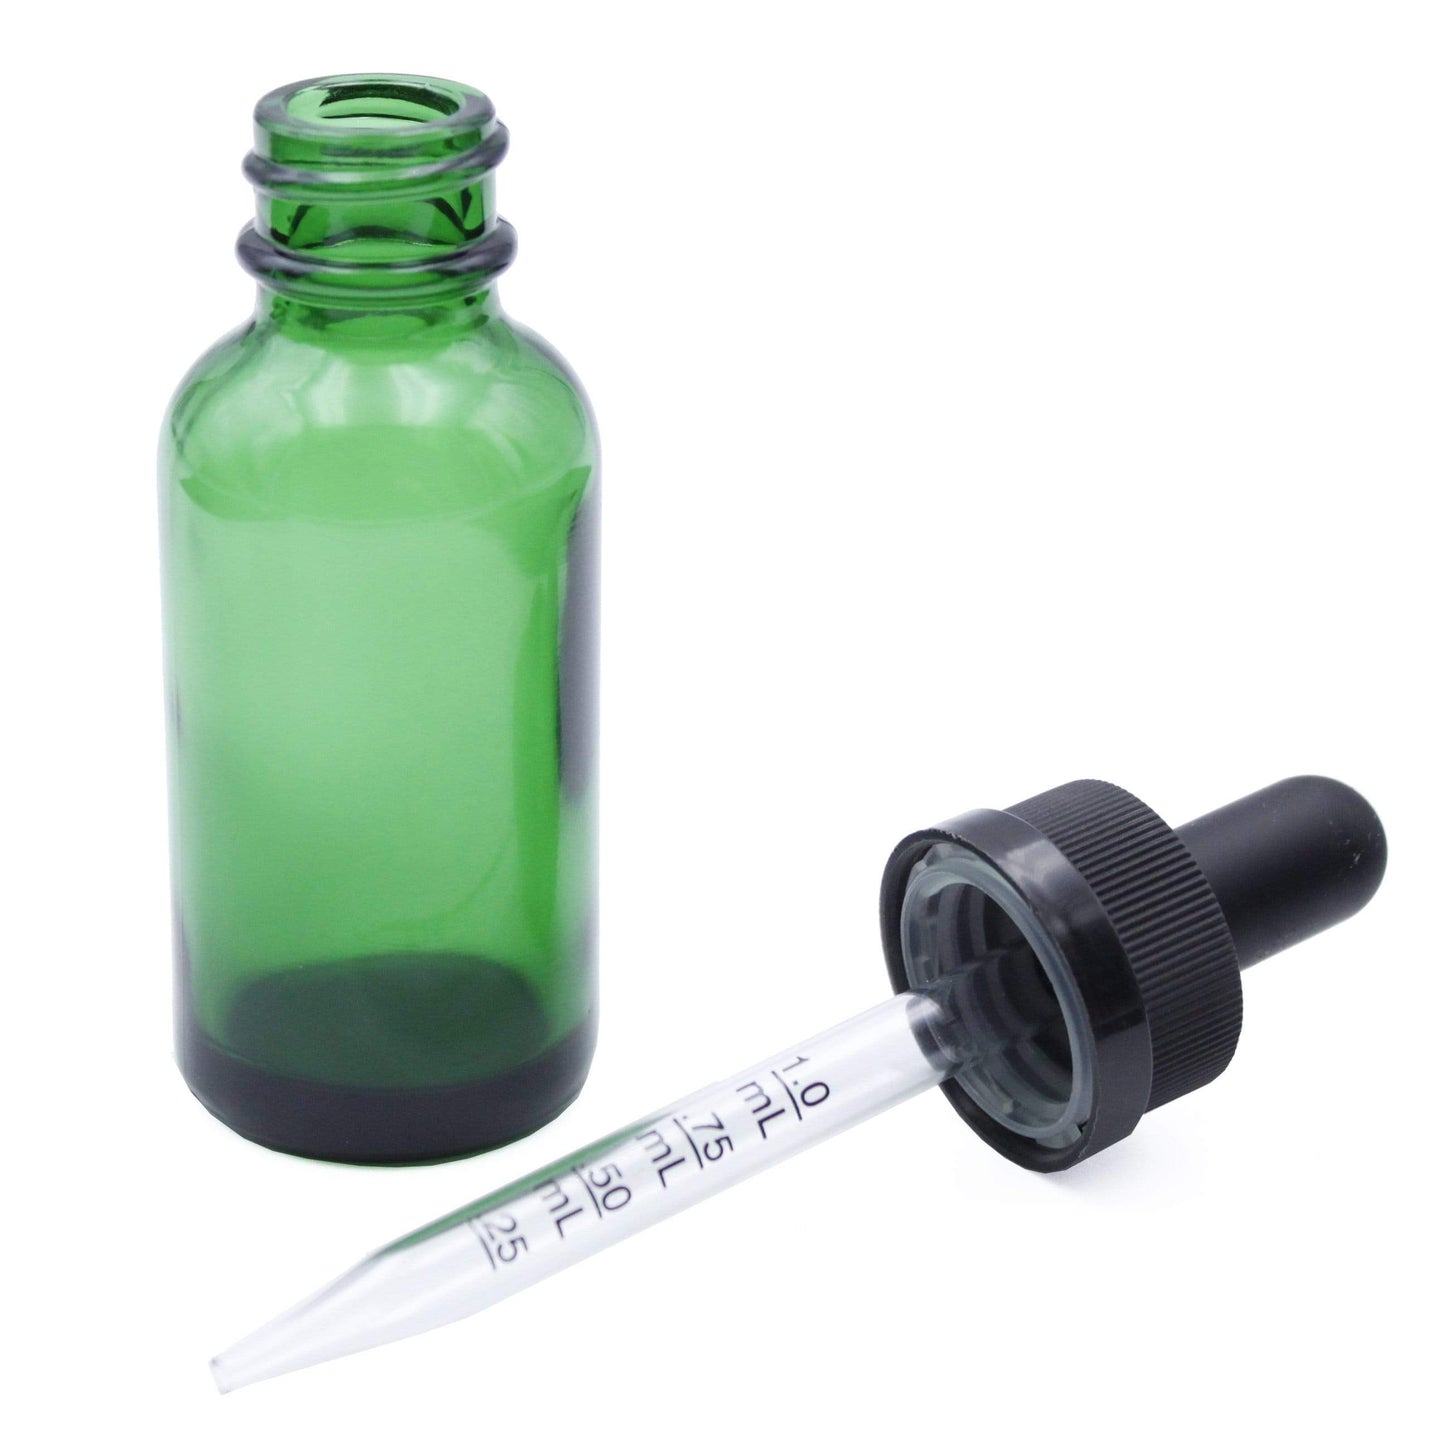 Green Child-Resistant Glass Dropper Bottle w/ 1.0ml Graduated Dropper - 1 oz